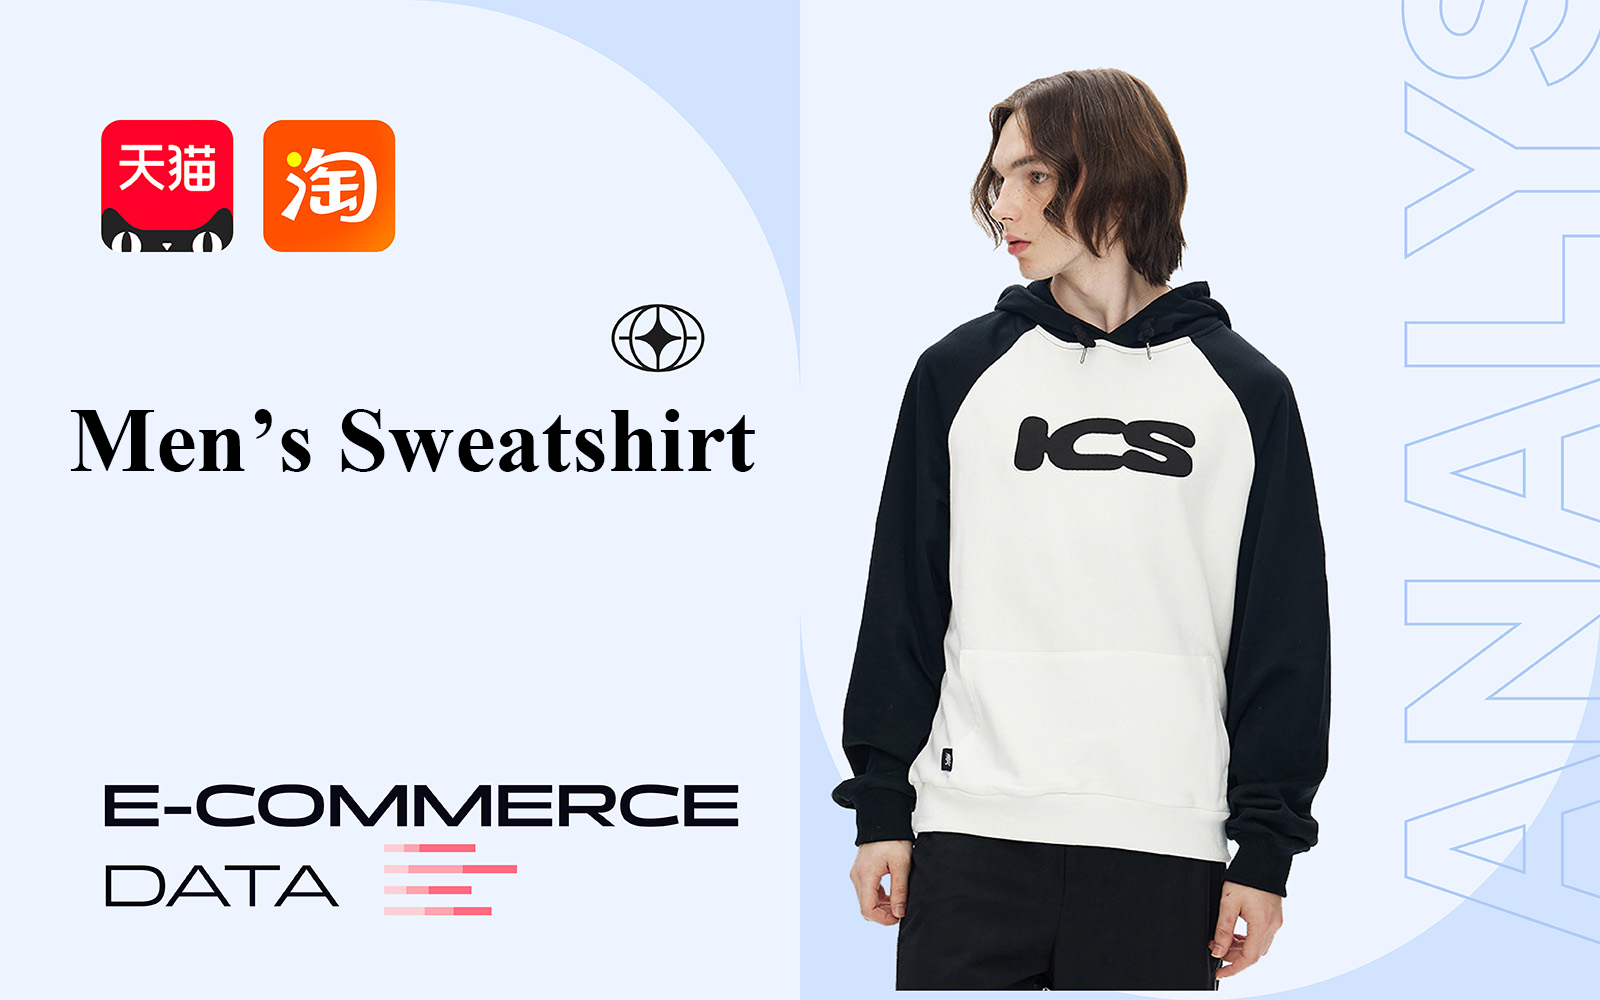 Sweatshirt -- The Data Analysis of Menswear E-Commerce